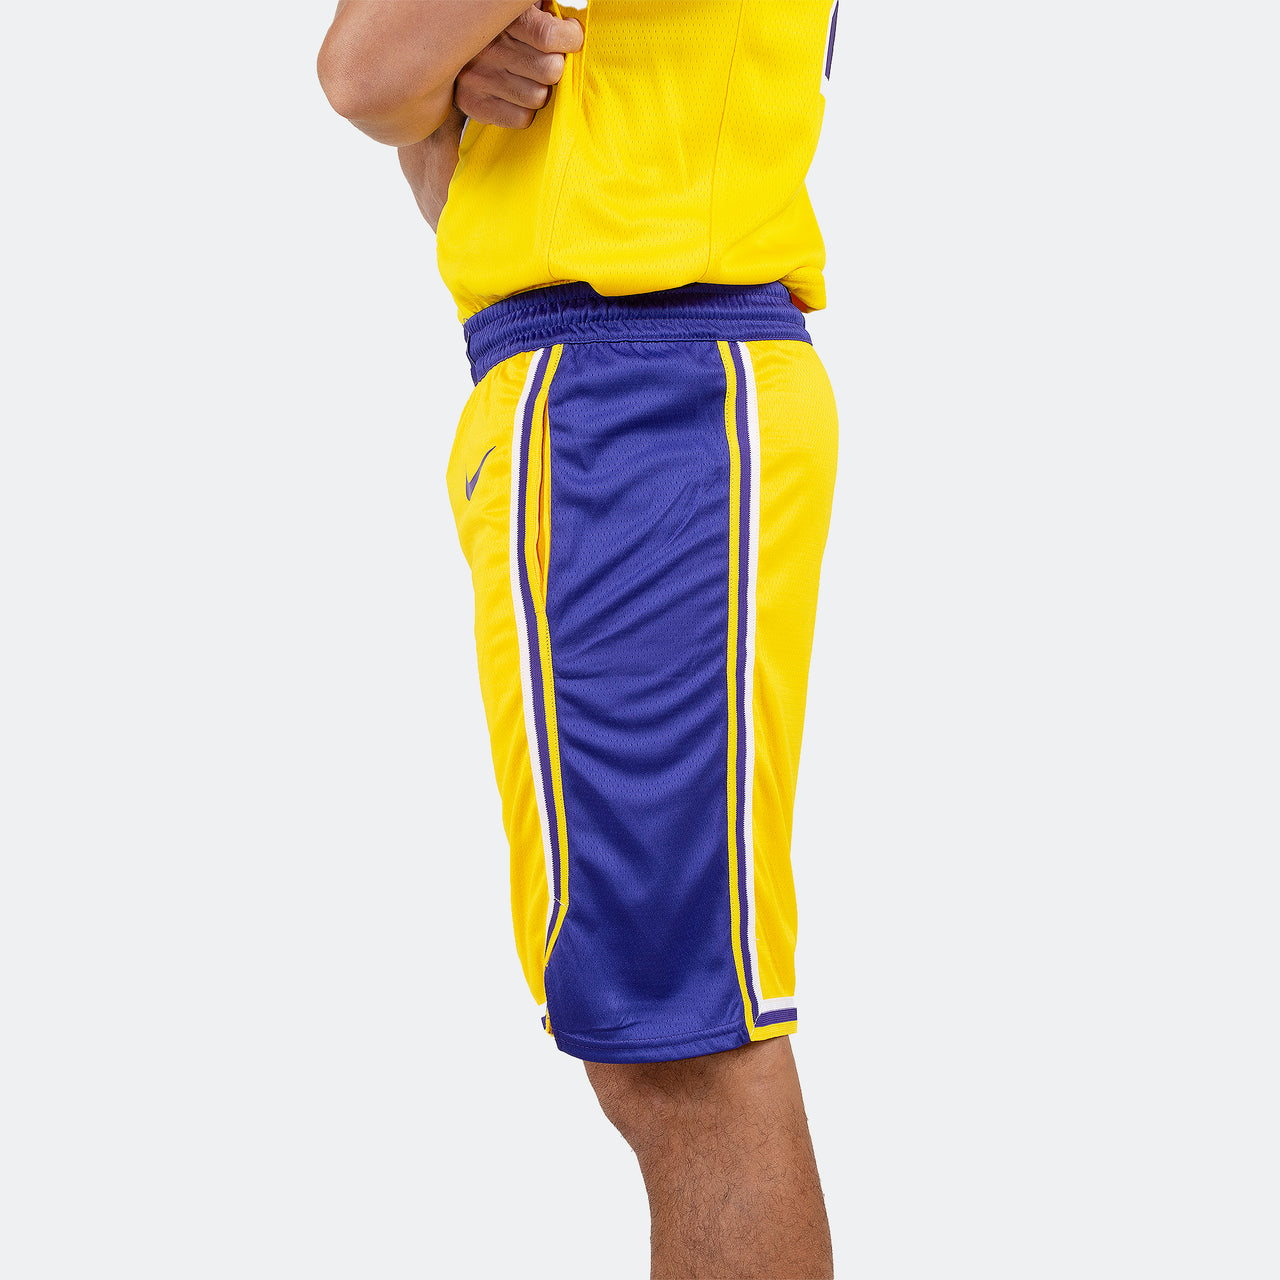 Los Angeles Lakers Men Yellow Shorts